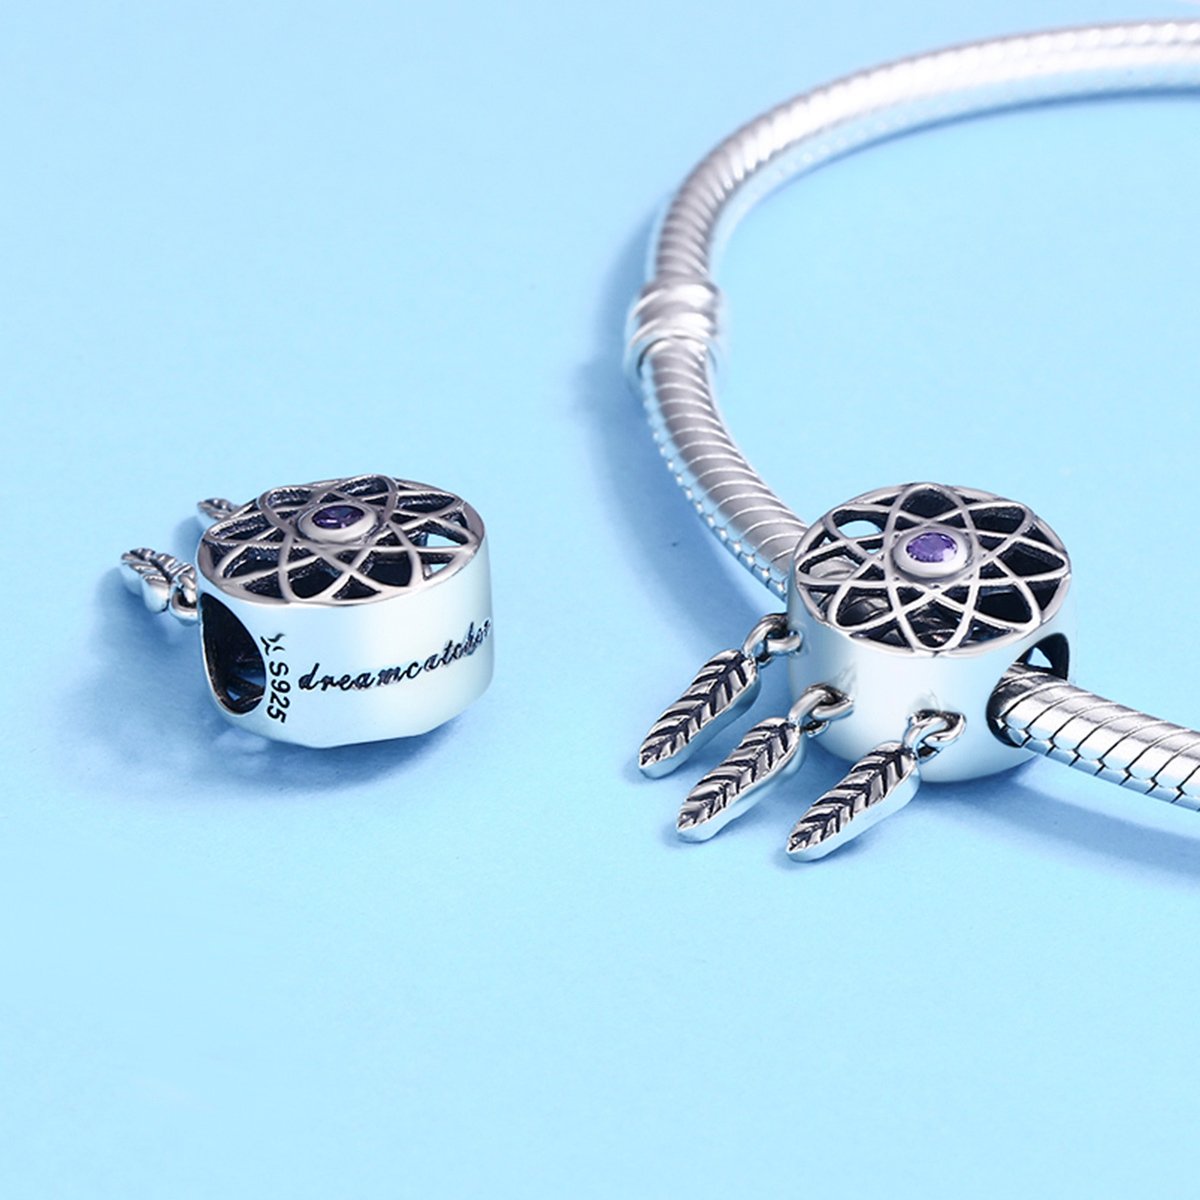 Sterling 925 silver charm the satellite bead pendant fits Pandora charm and European charm bracelet Xaxe.com